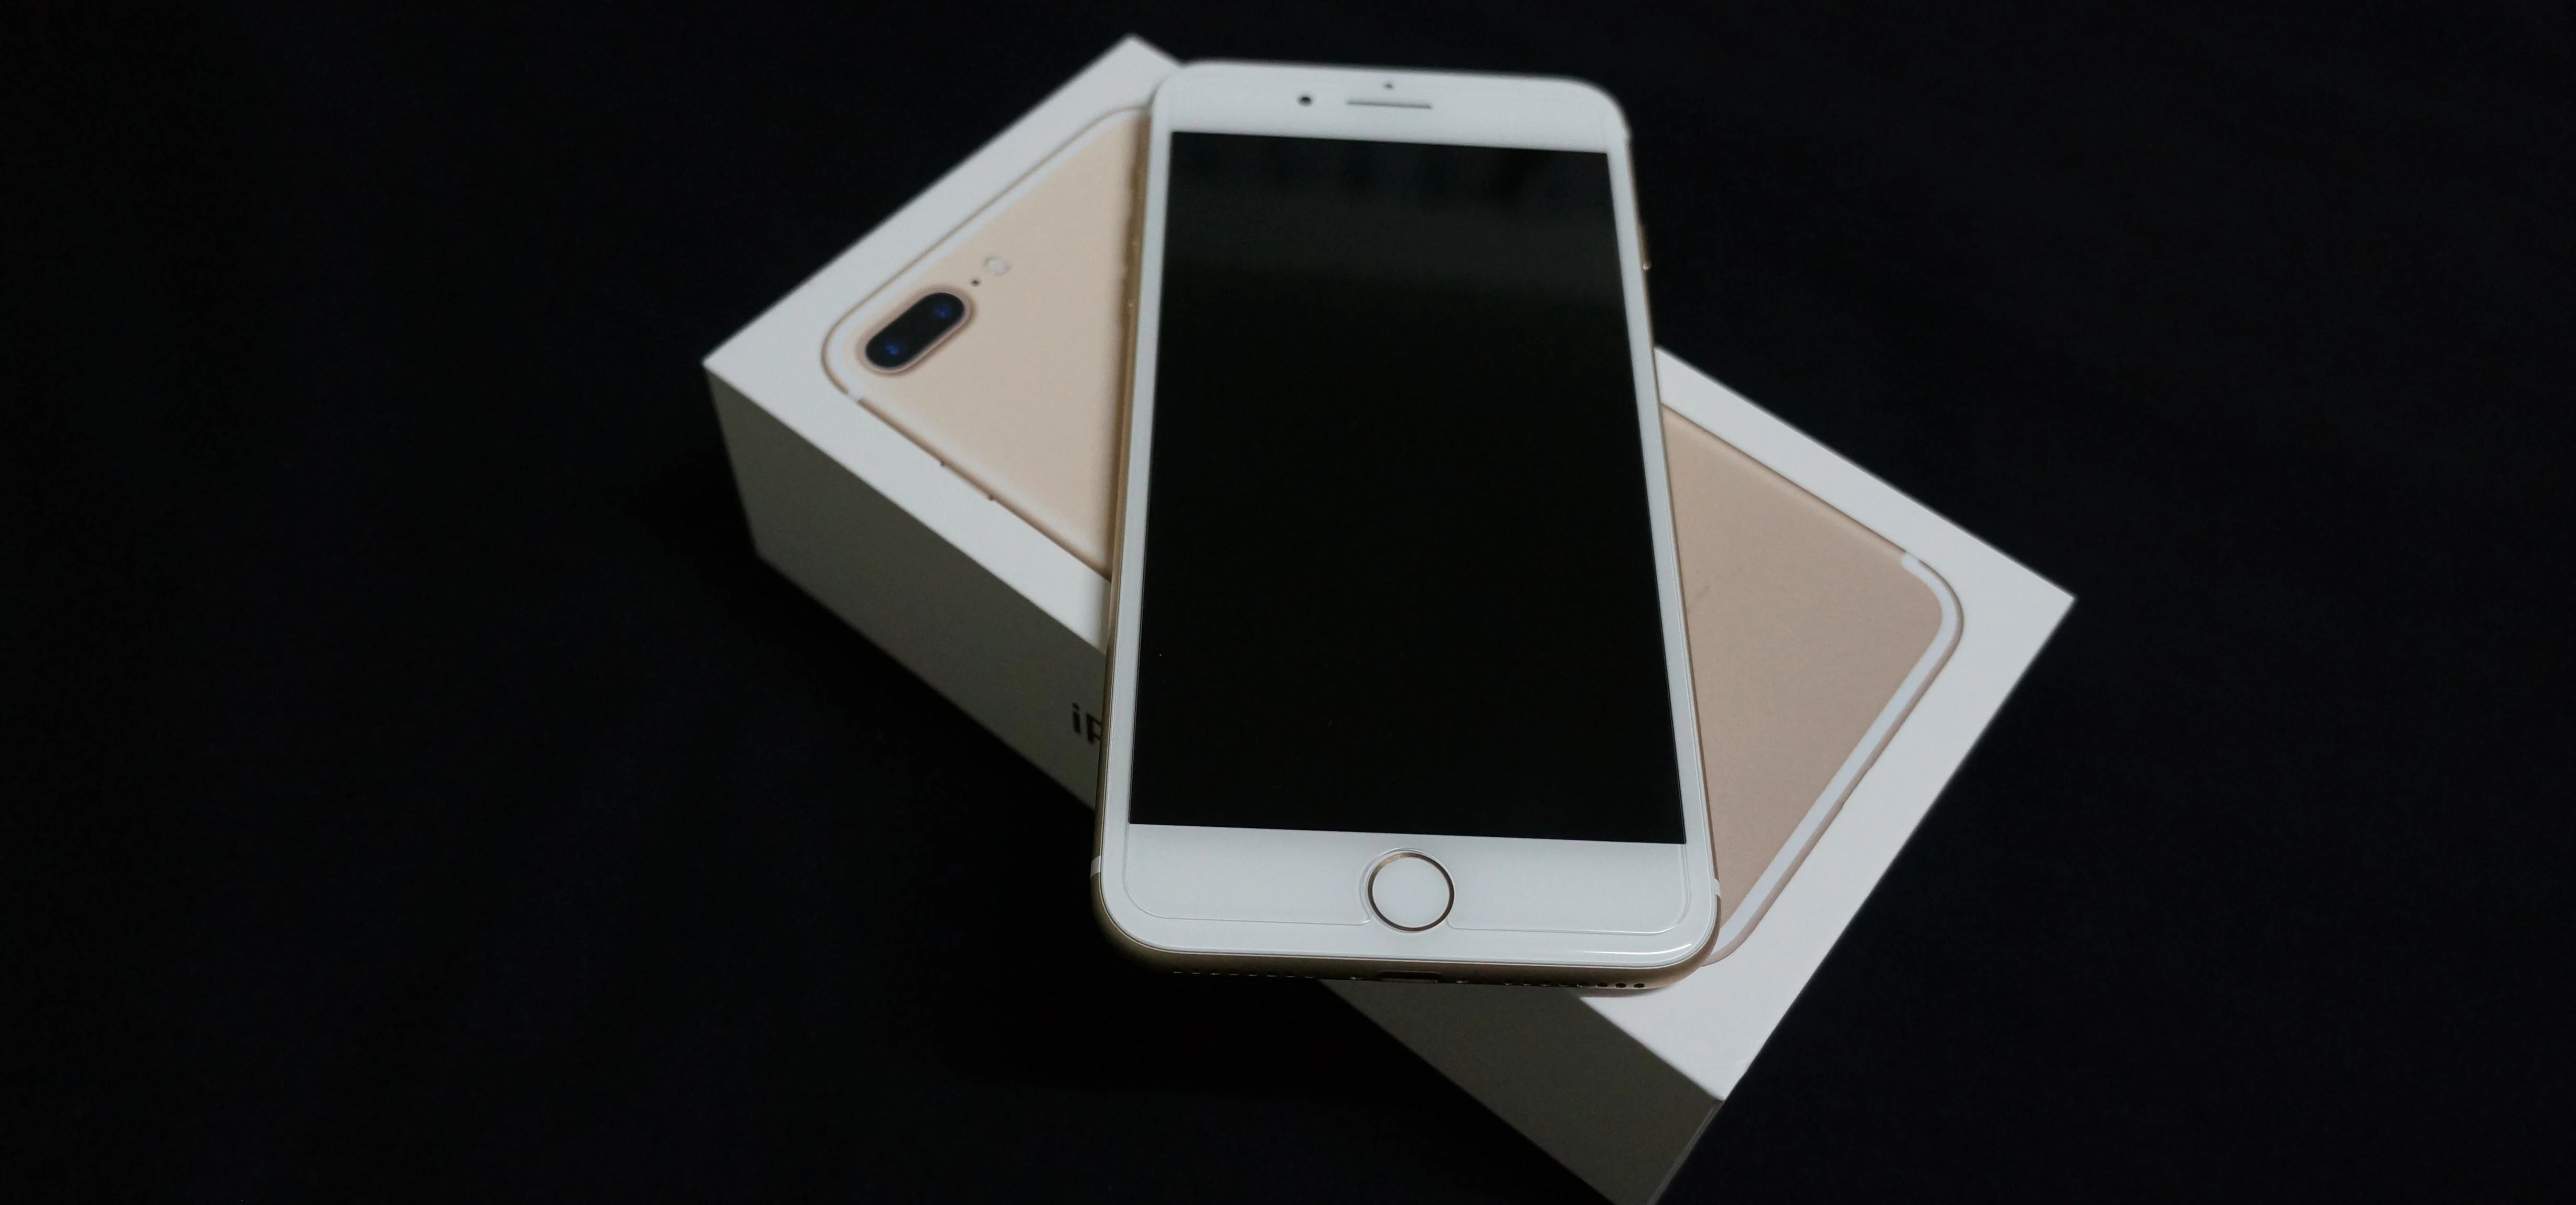 iPhone 7 Plus (Gold) on box